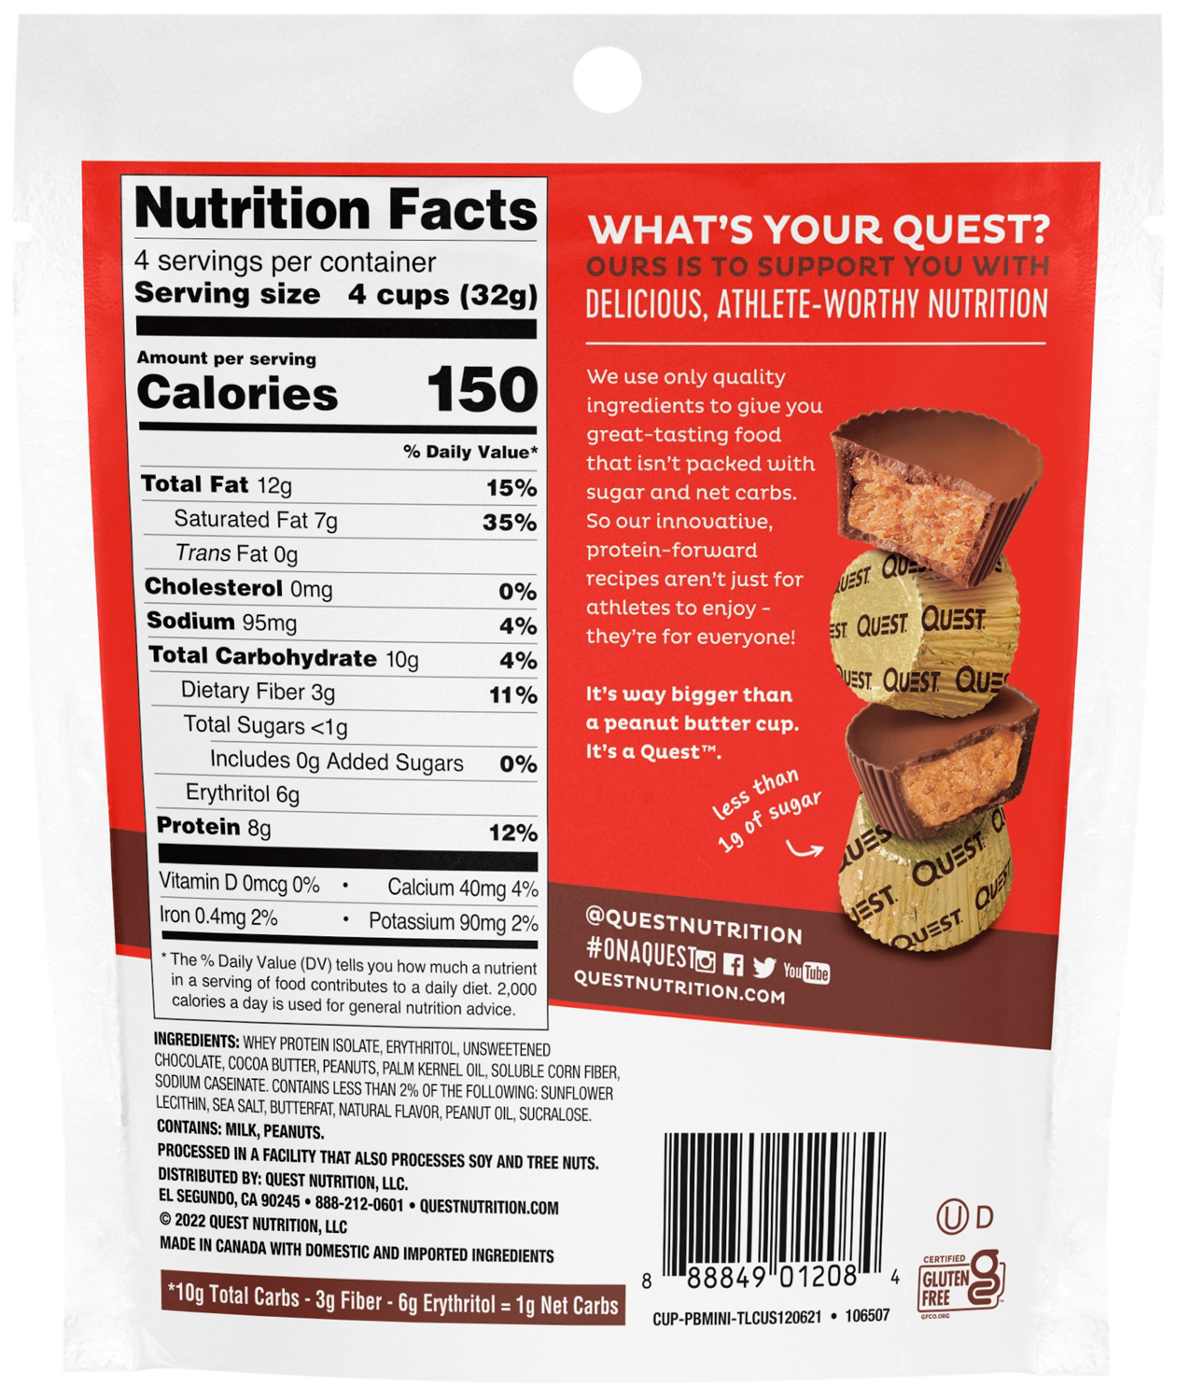 Quest Peanut Butter Cups - 12 pack, 1.48 oz